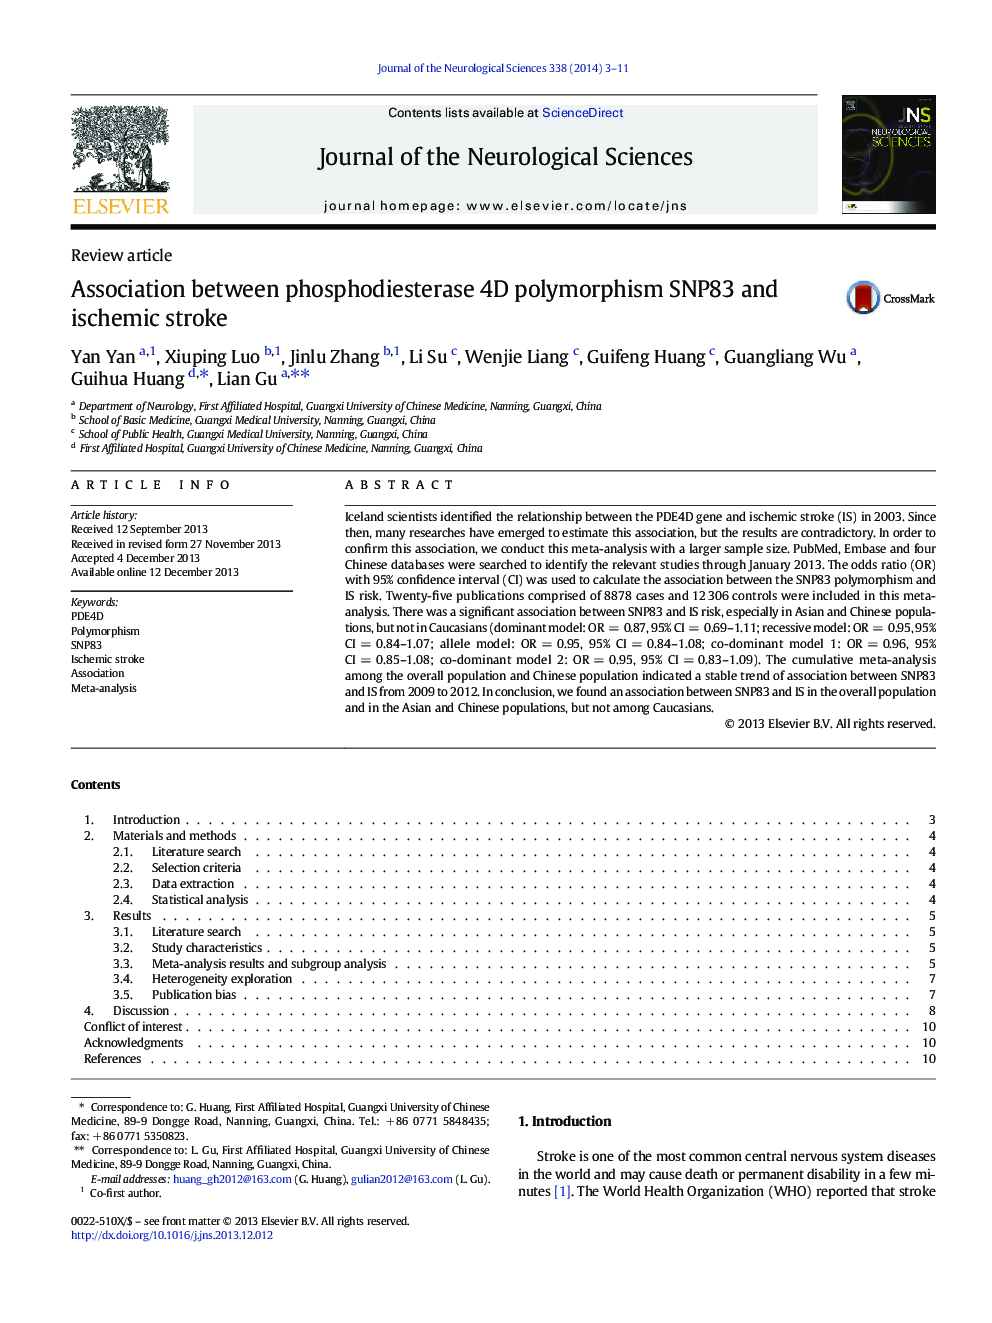 Association between phosphodiesterase 4D polymorphism SNP83 and ischemic stroke